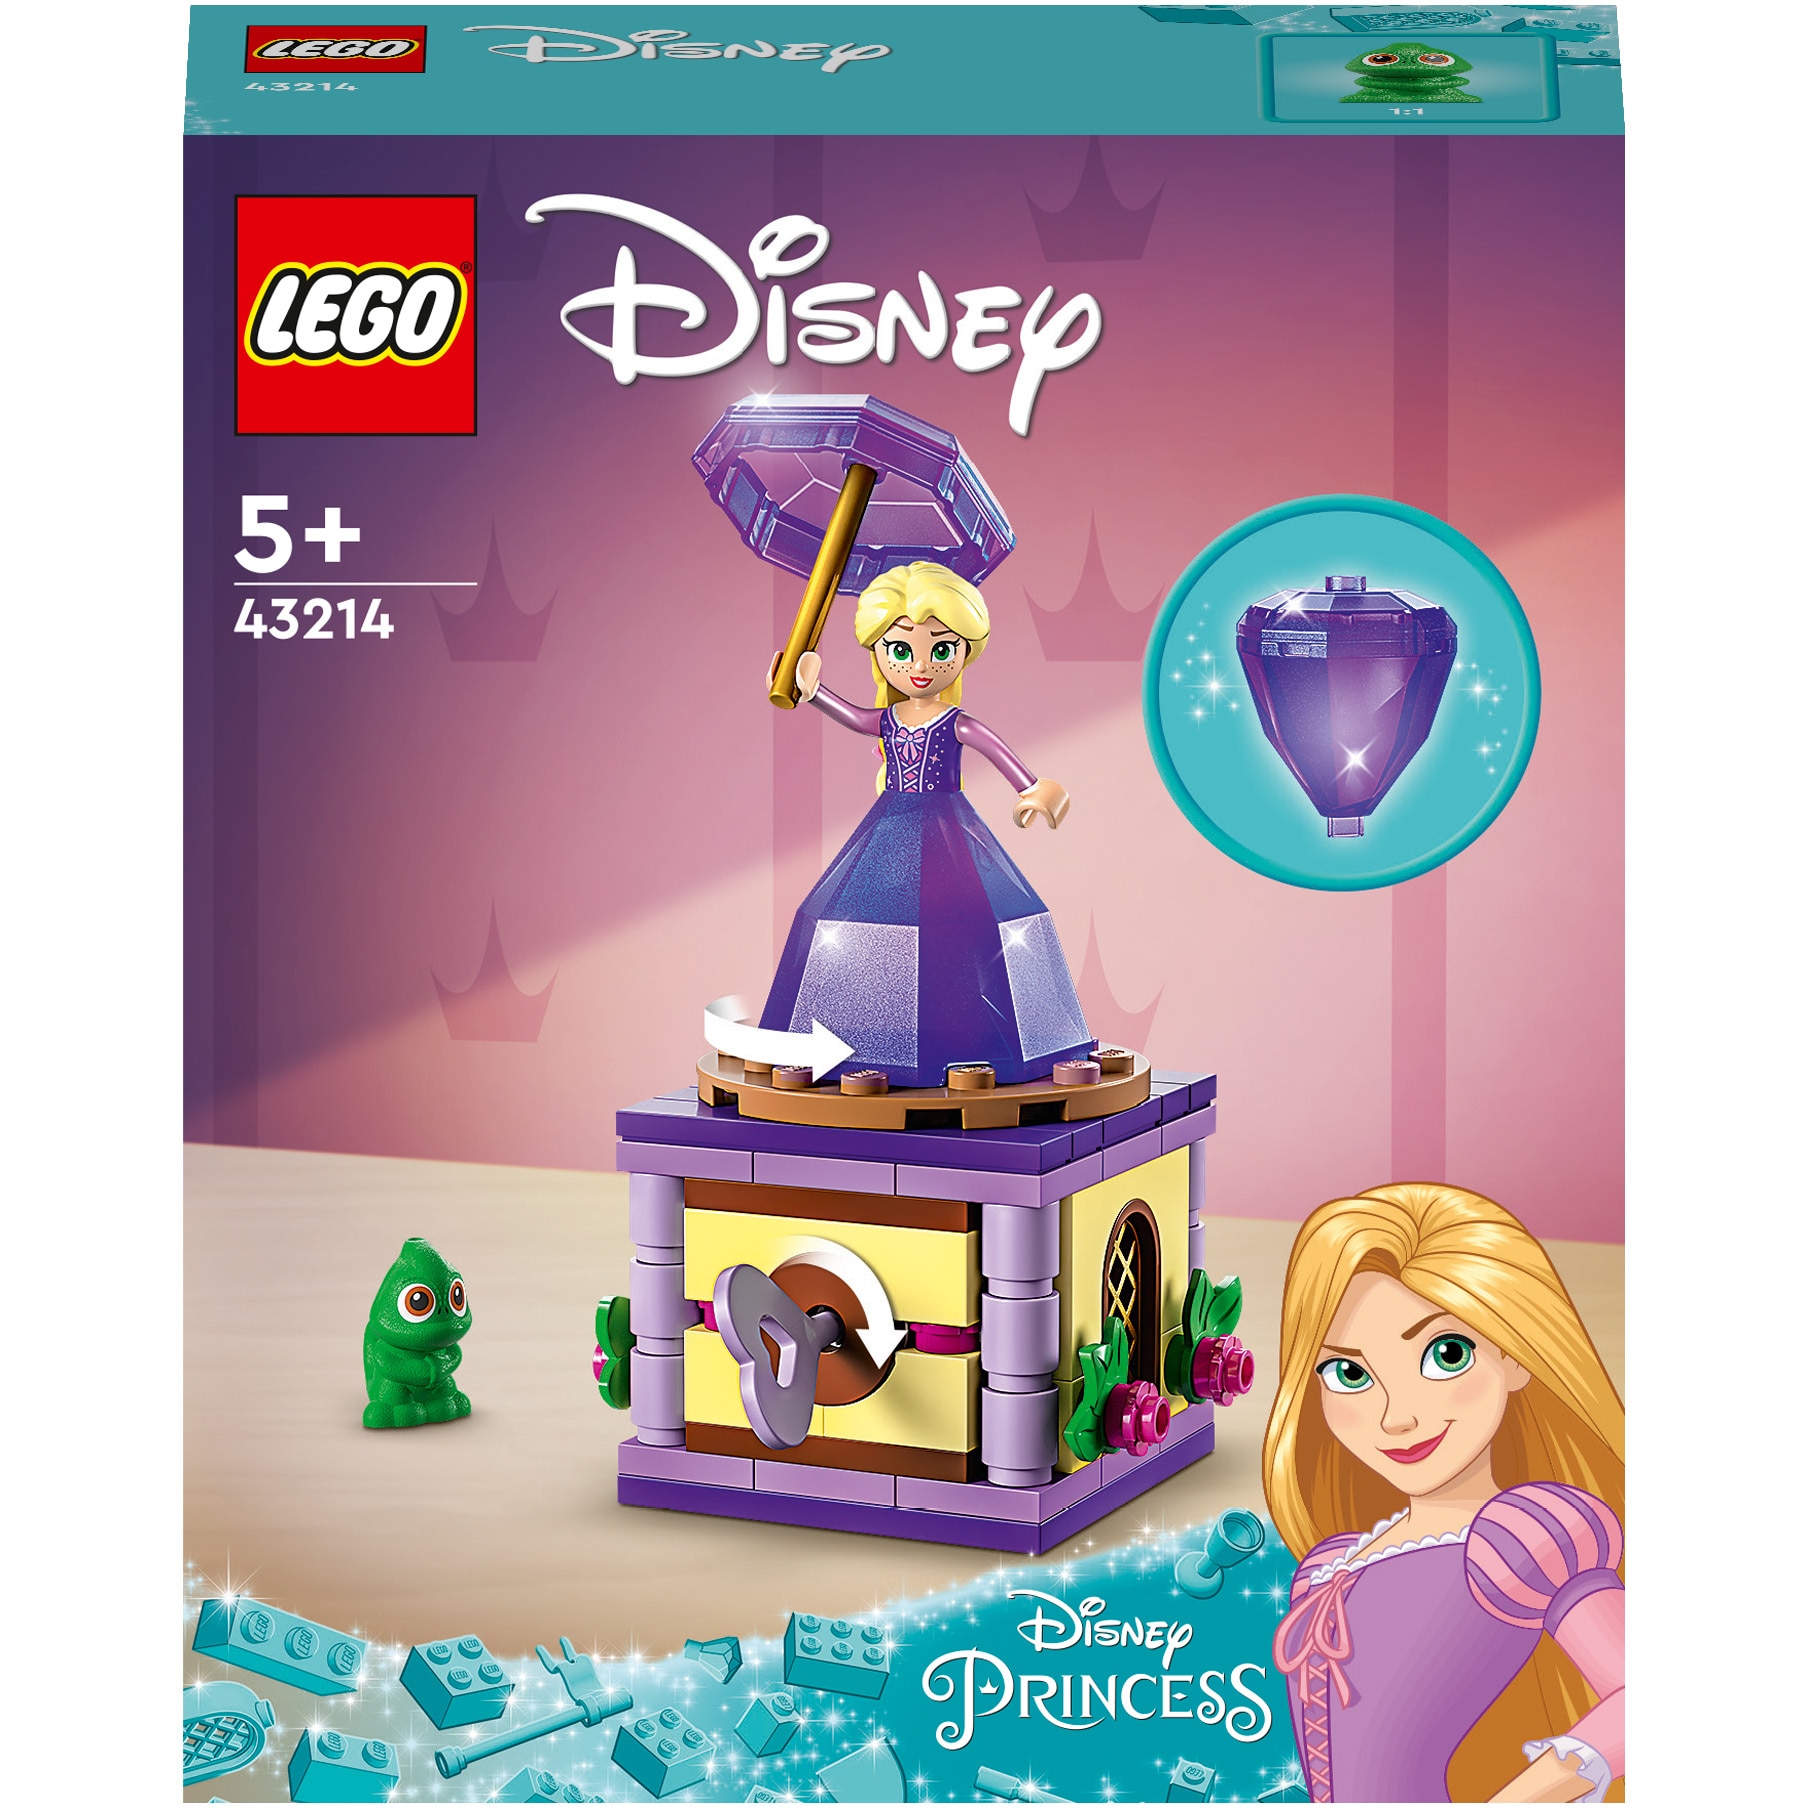 Fotografie LEGO® Disney Princess - Rapunzel facand piruete 43214, 89 piese